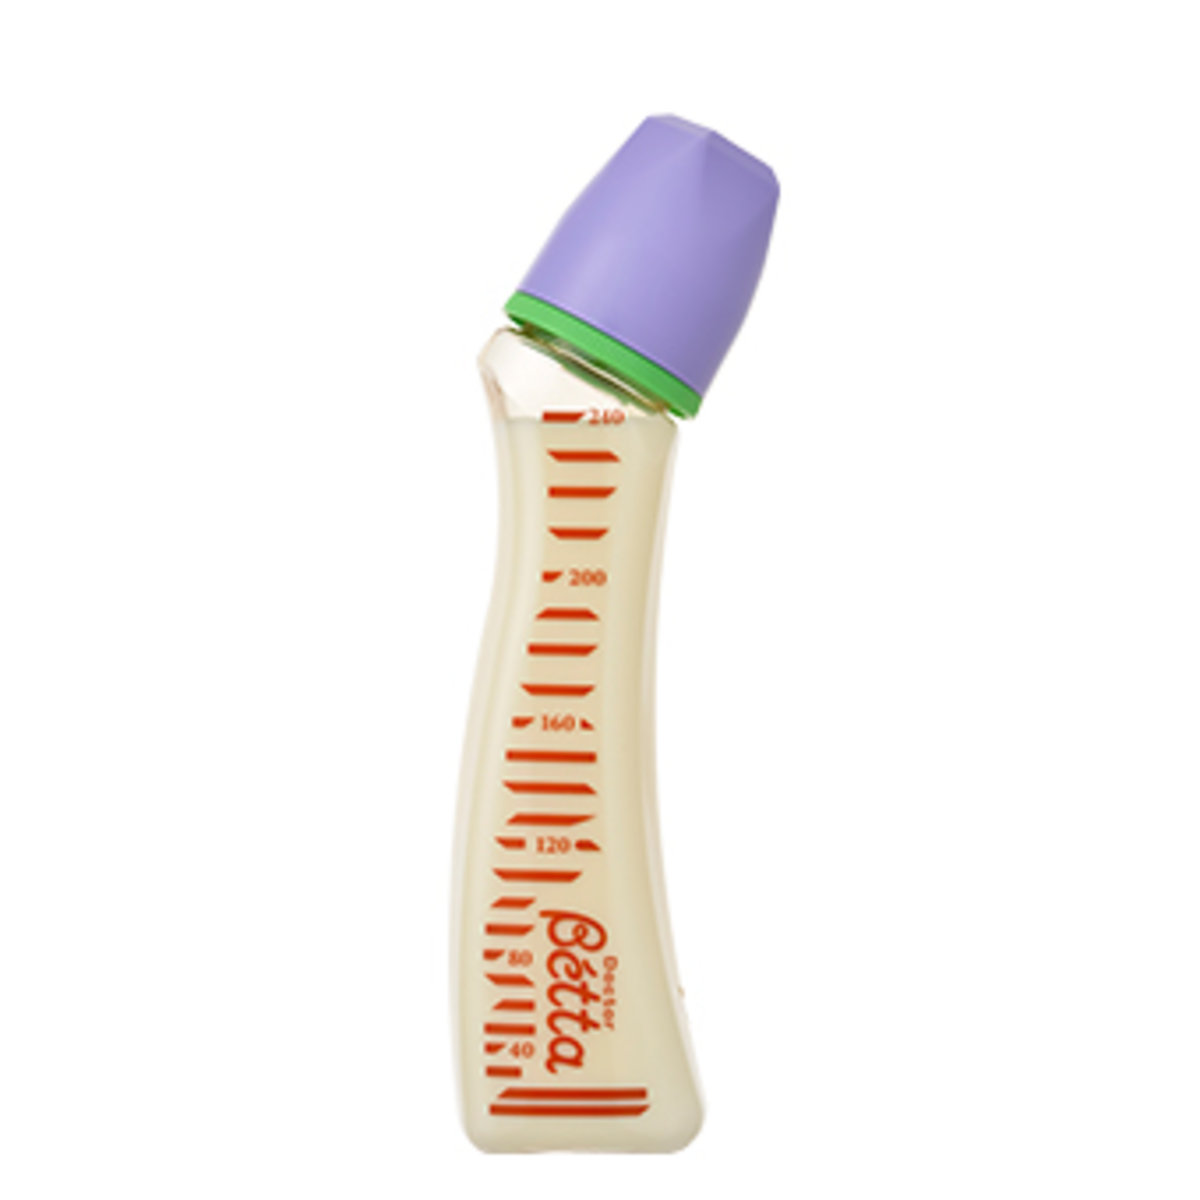 Jewel PPSU Milk Feeding Bottle (S1, 240ml) Orange